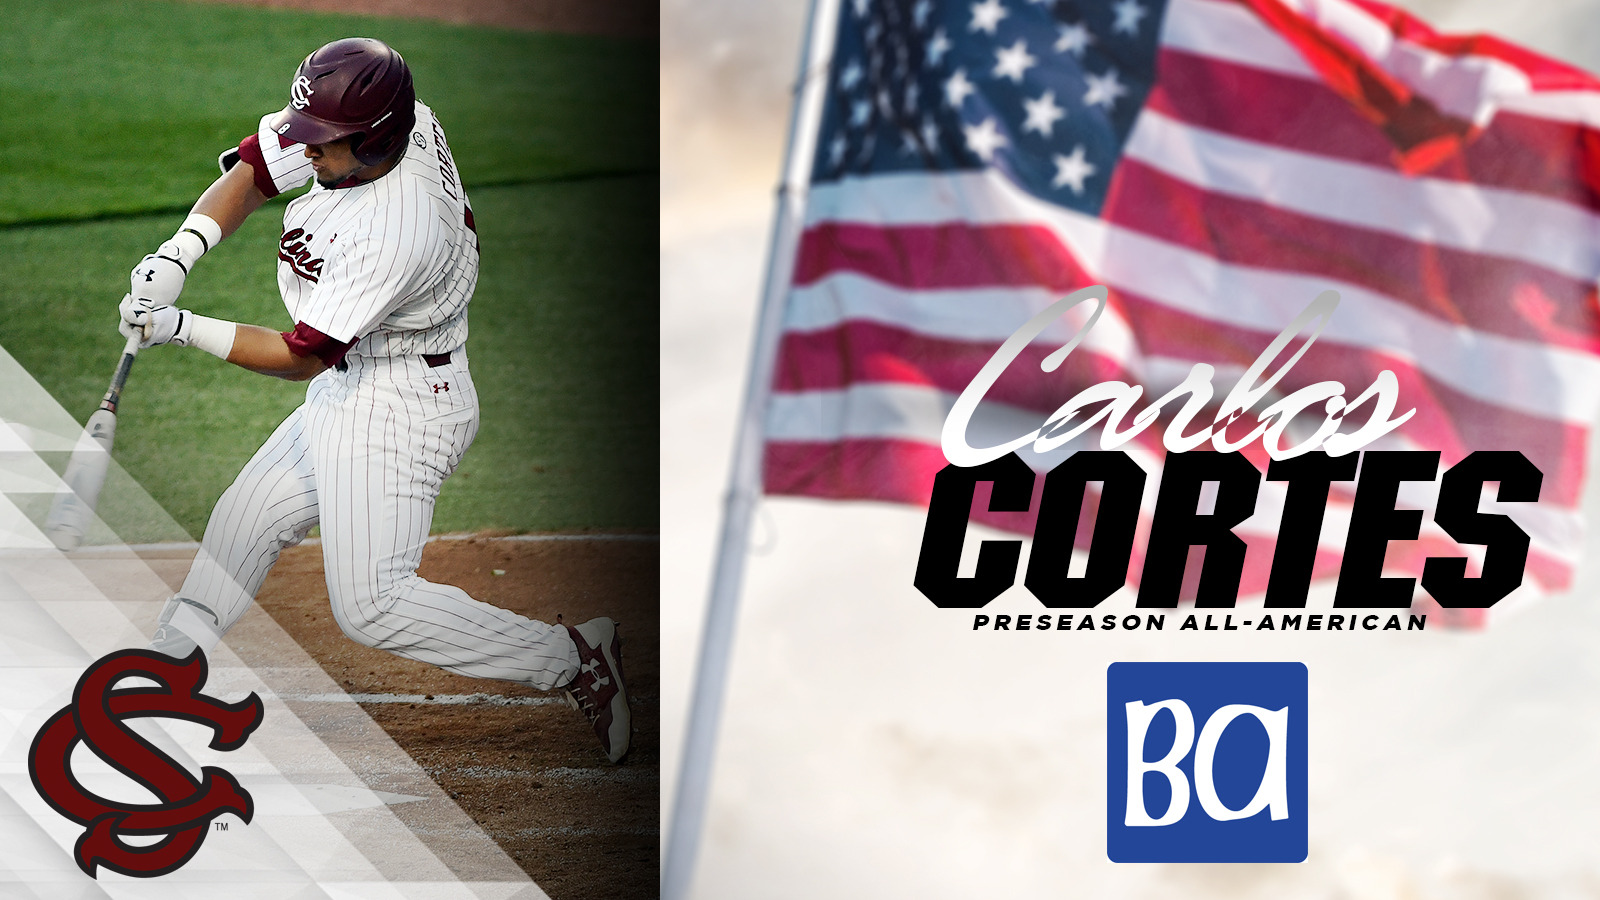 Cortes Earns Preseason All-America Honors by Baseball America